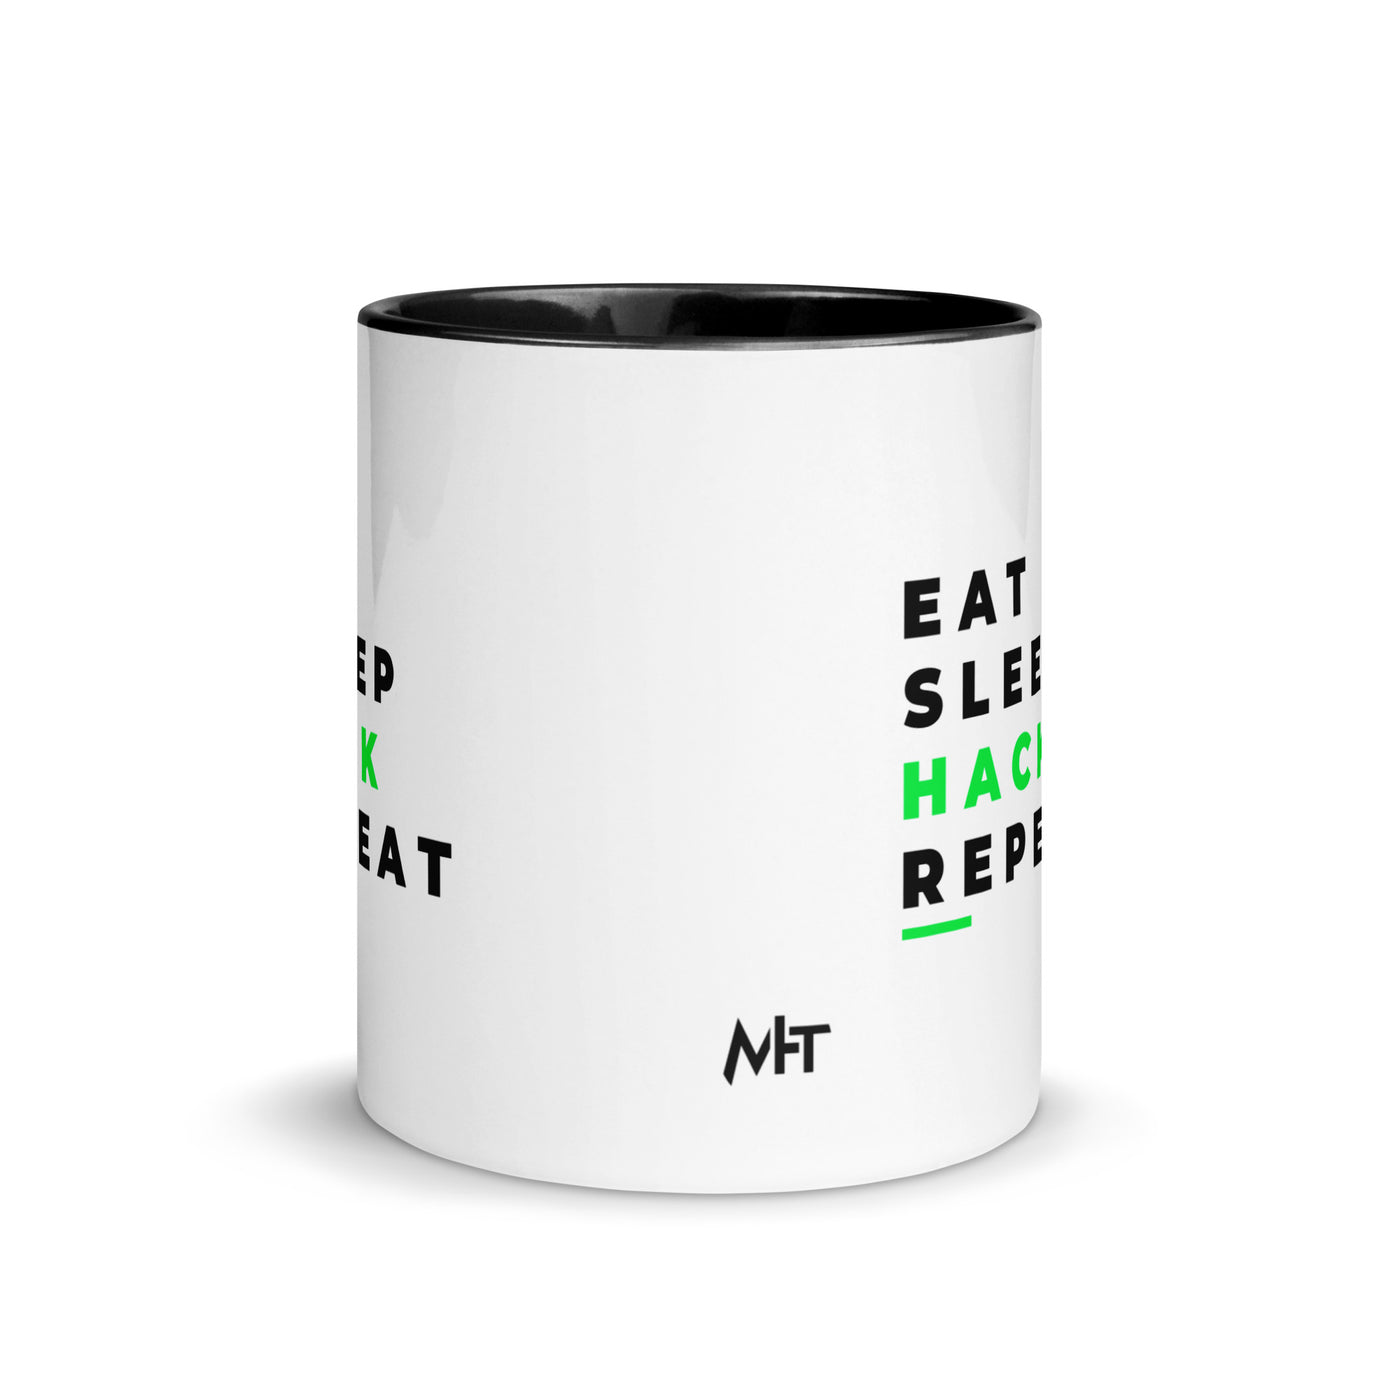 Eat, Sleep, Hack, Repeat V2 - Mug with Color Inside